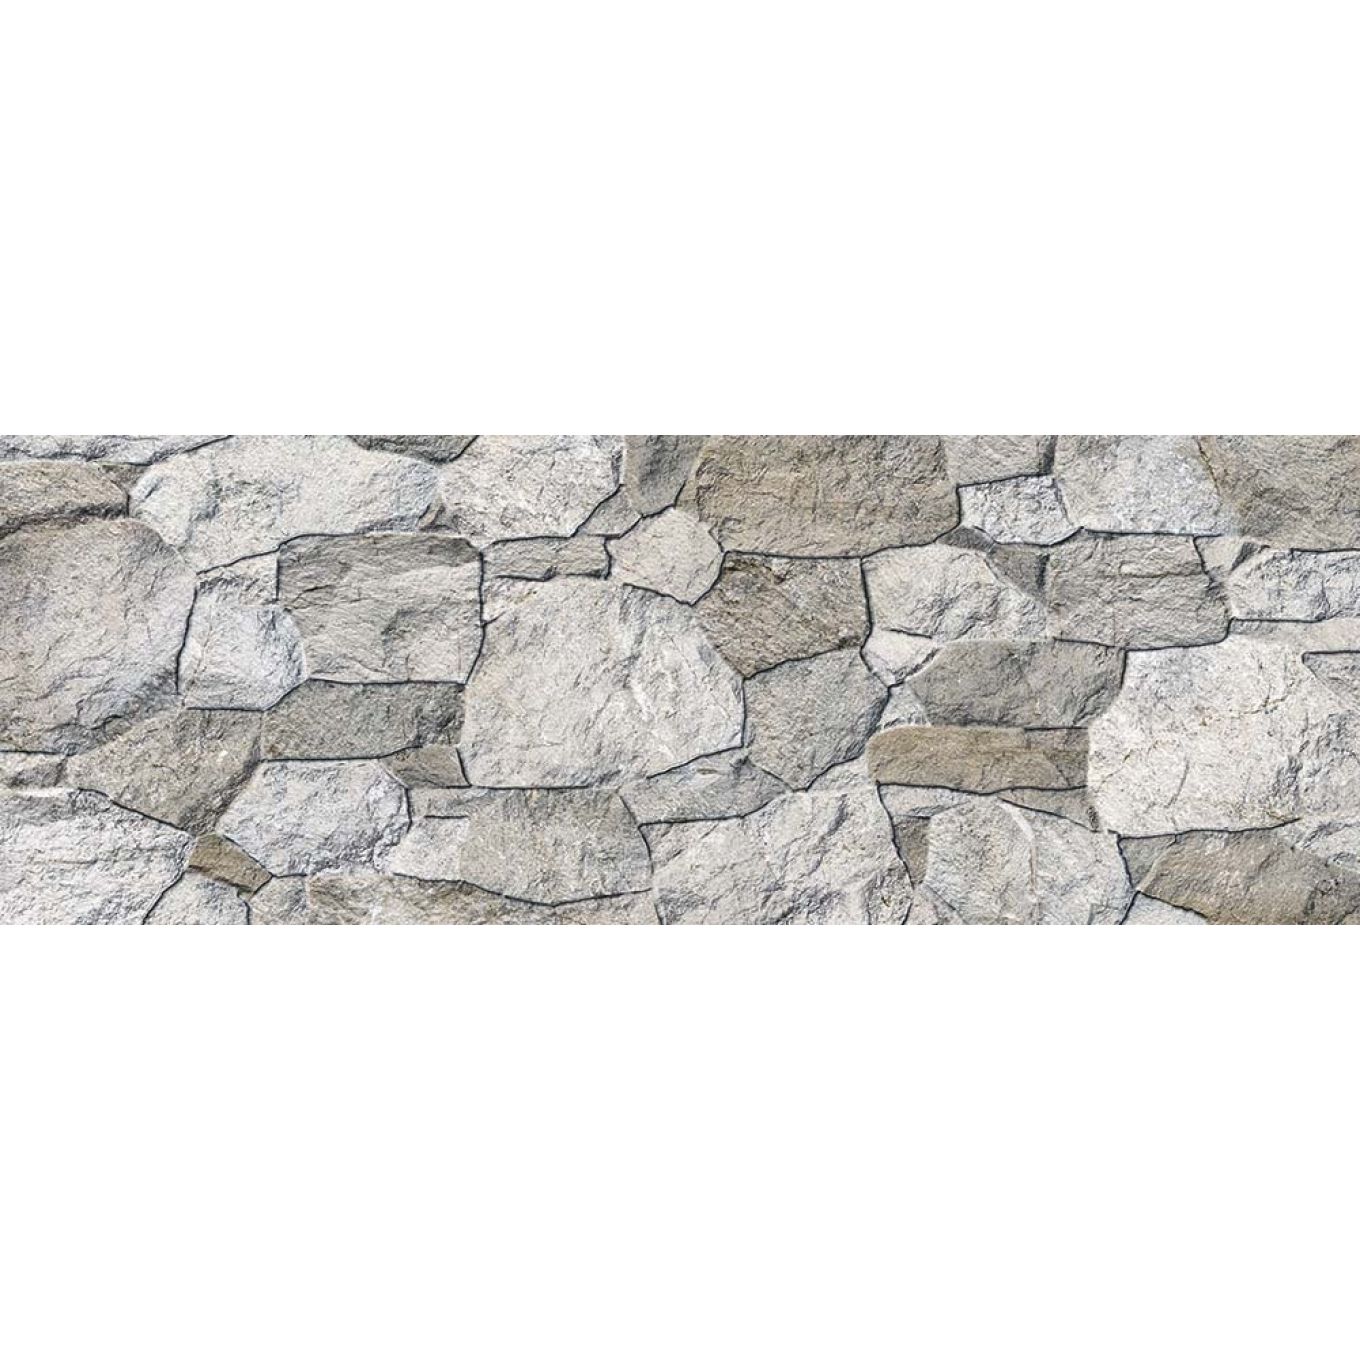 Topeka Nature Stone Wall Porcelain Tile - 320x890mm